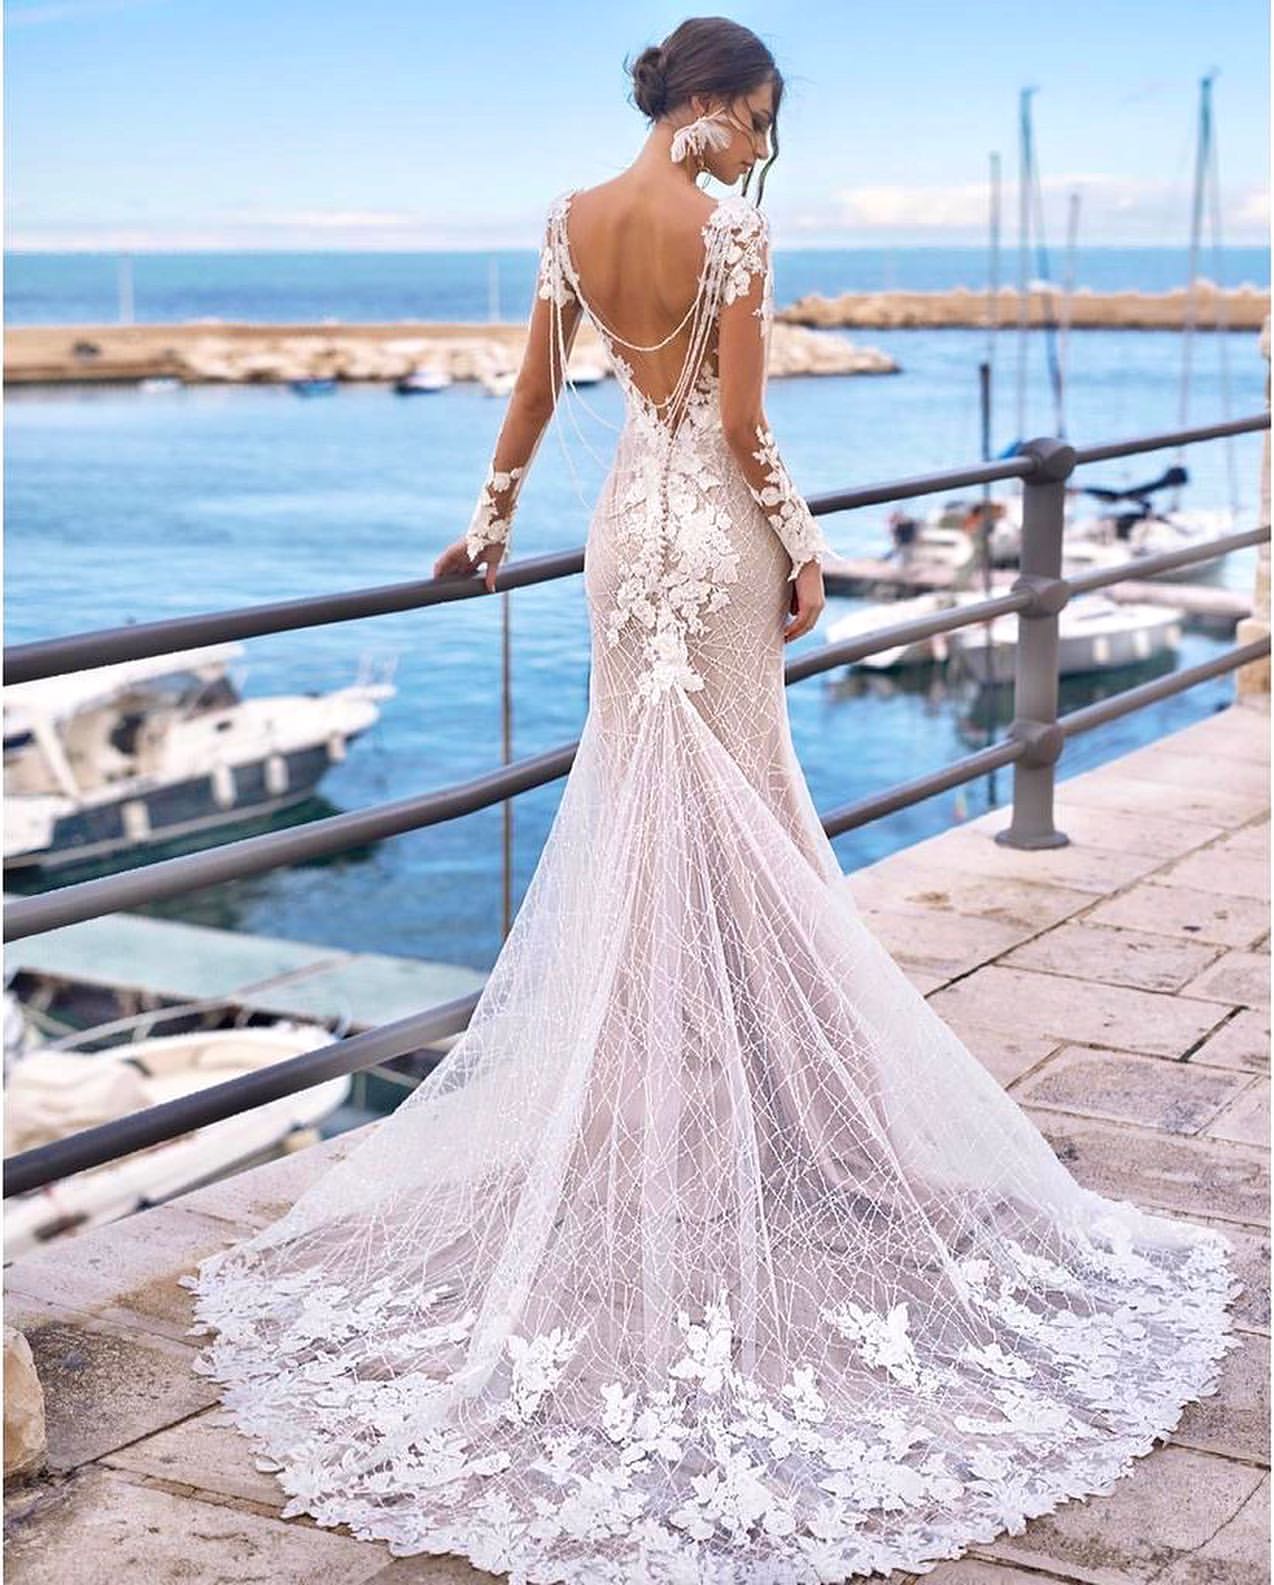 Sleeveless Mermaid Wedding Dress With Illusion Lace Bodice And Open Back